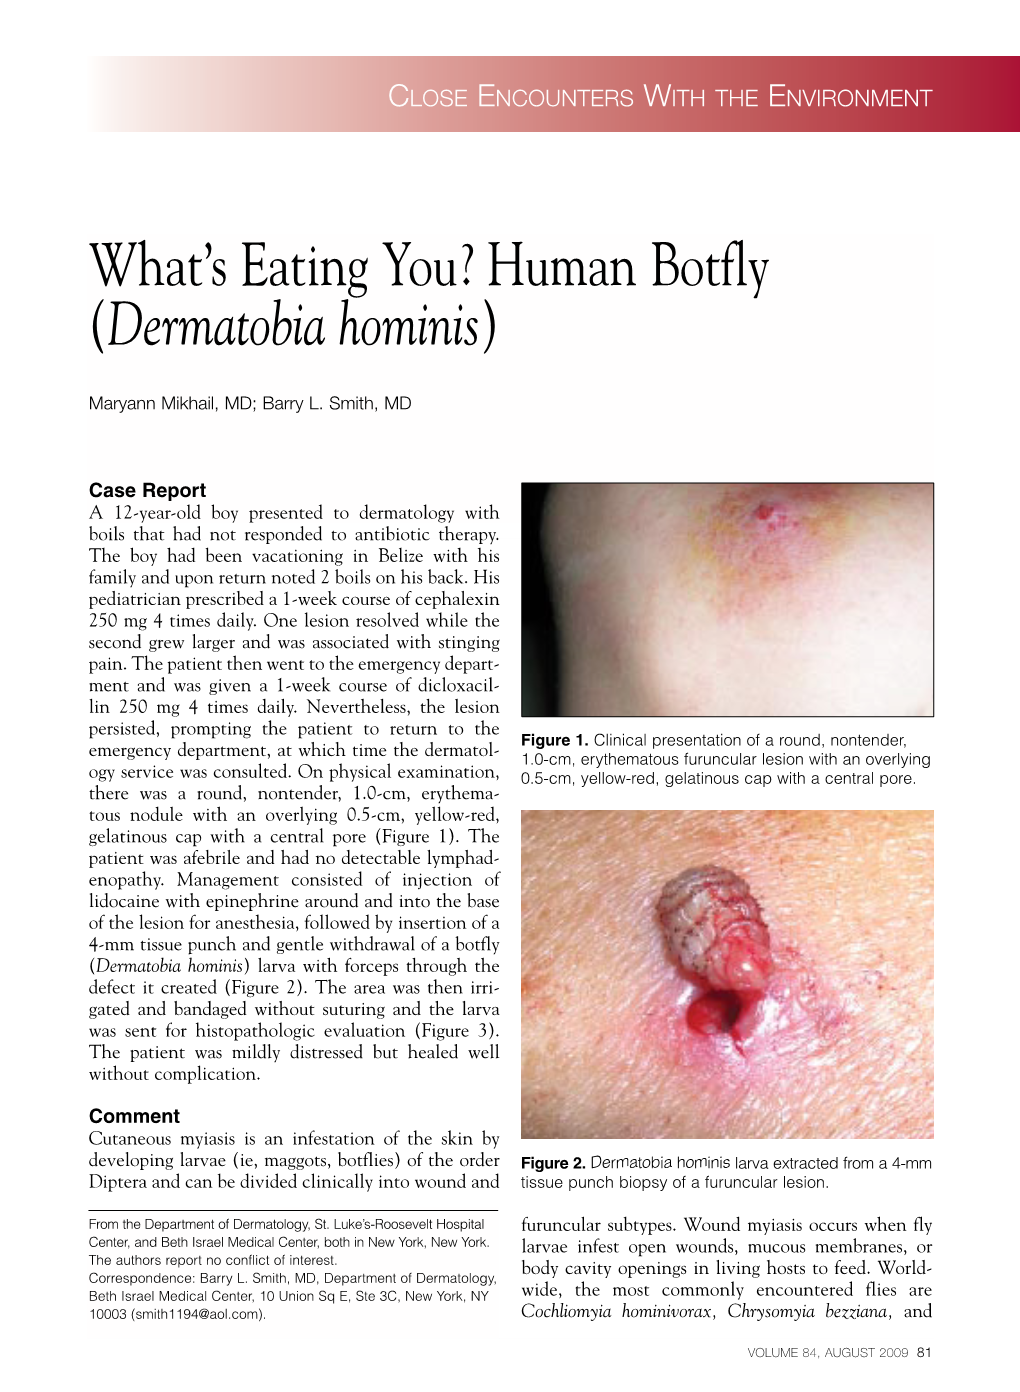 Human Botfly (Dermatobia Hominis)